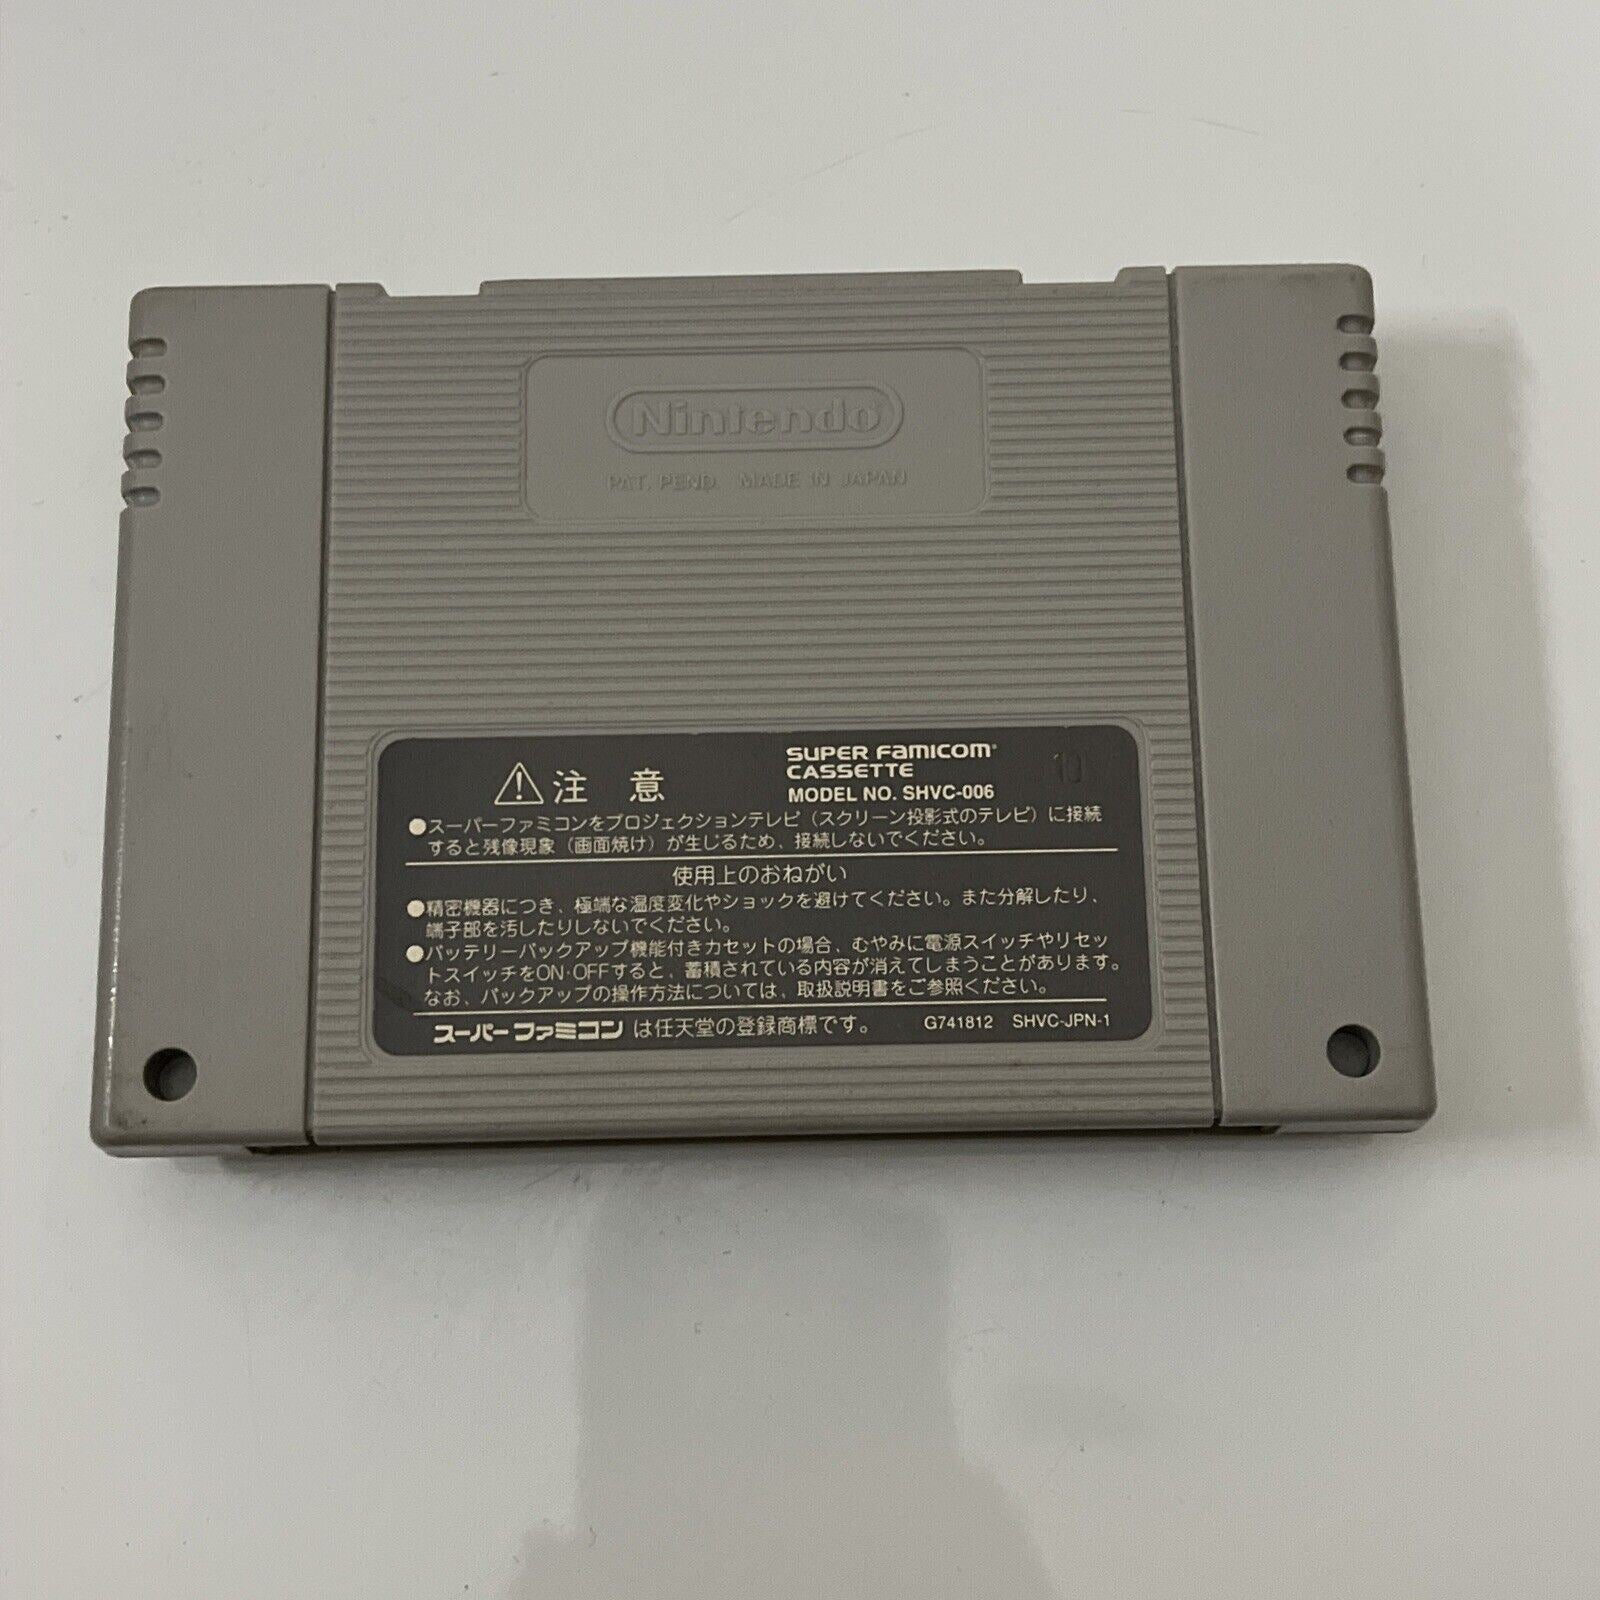  Super Bomberman 4, Super Famicom (Super NES Japanese